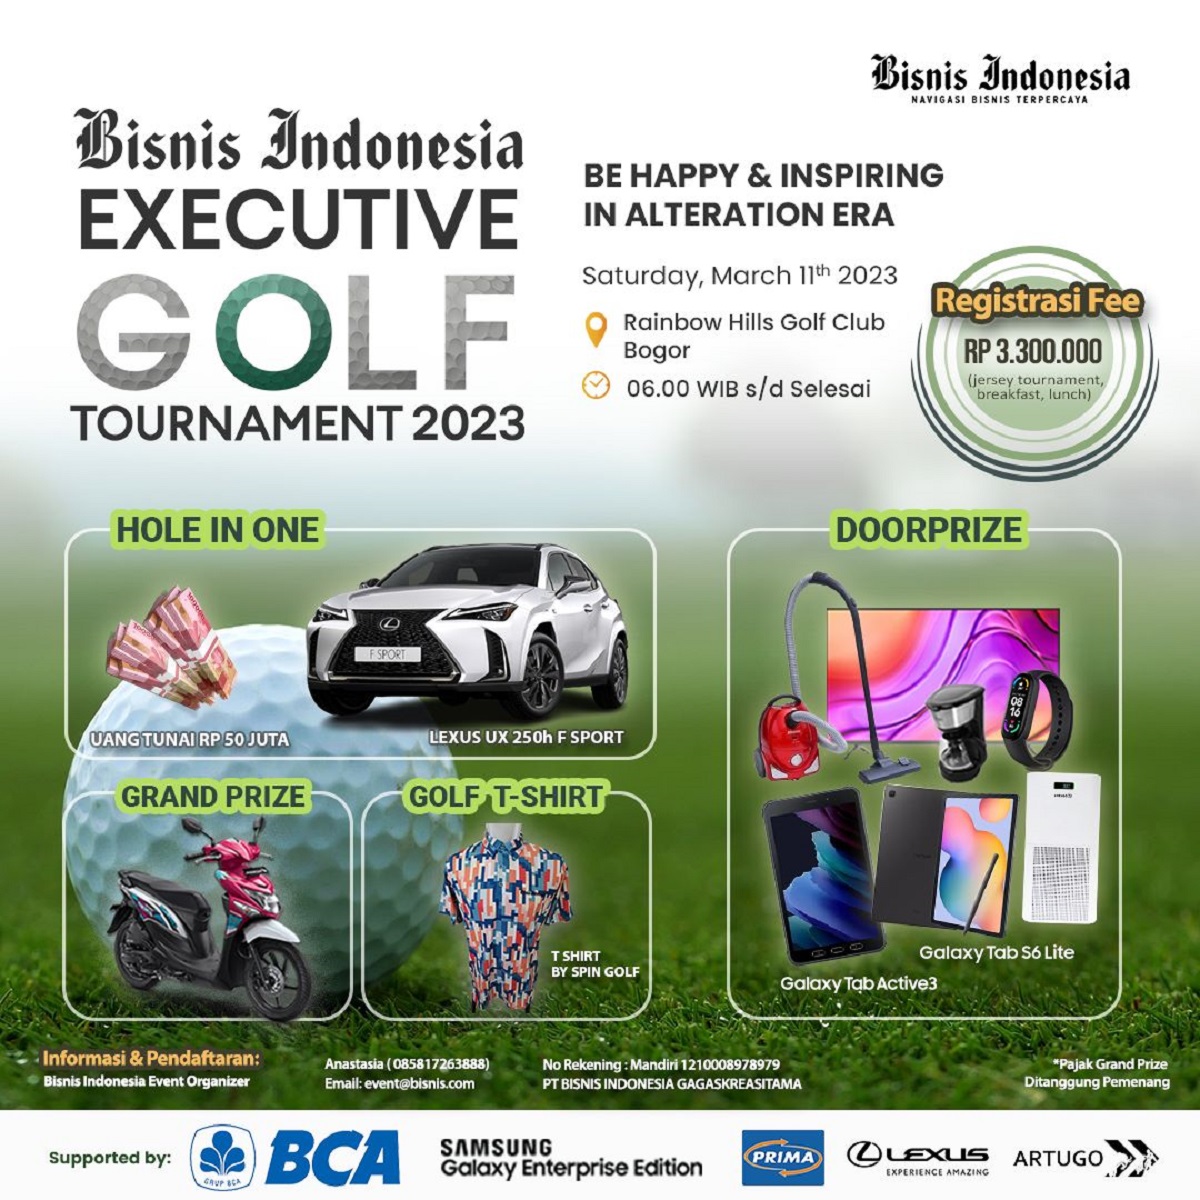 Bisnis Indonesia Executive Golf Tournament 2023 "Be Happy & Inspiring in Alteration Era"